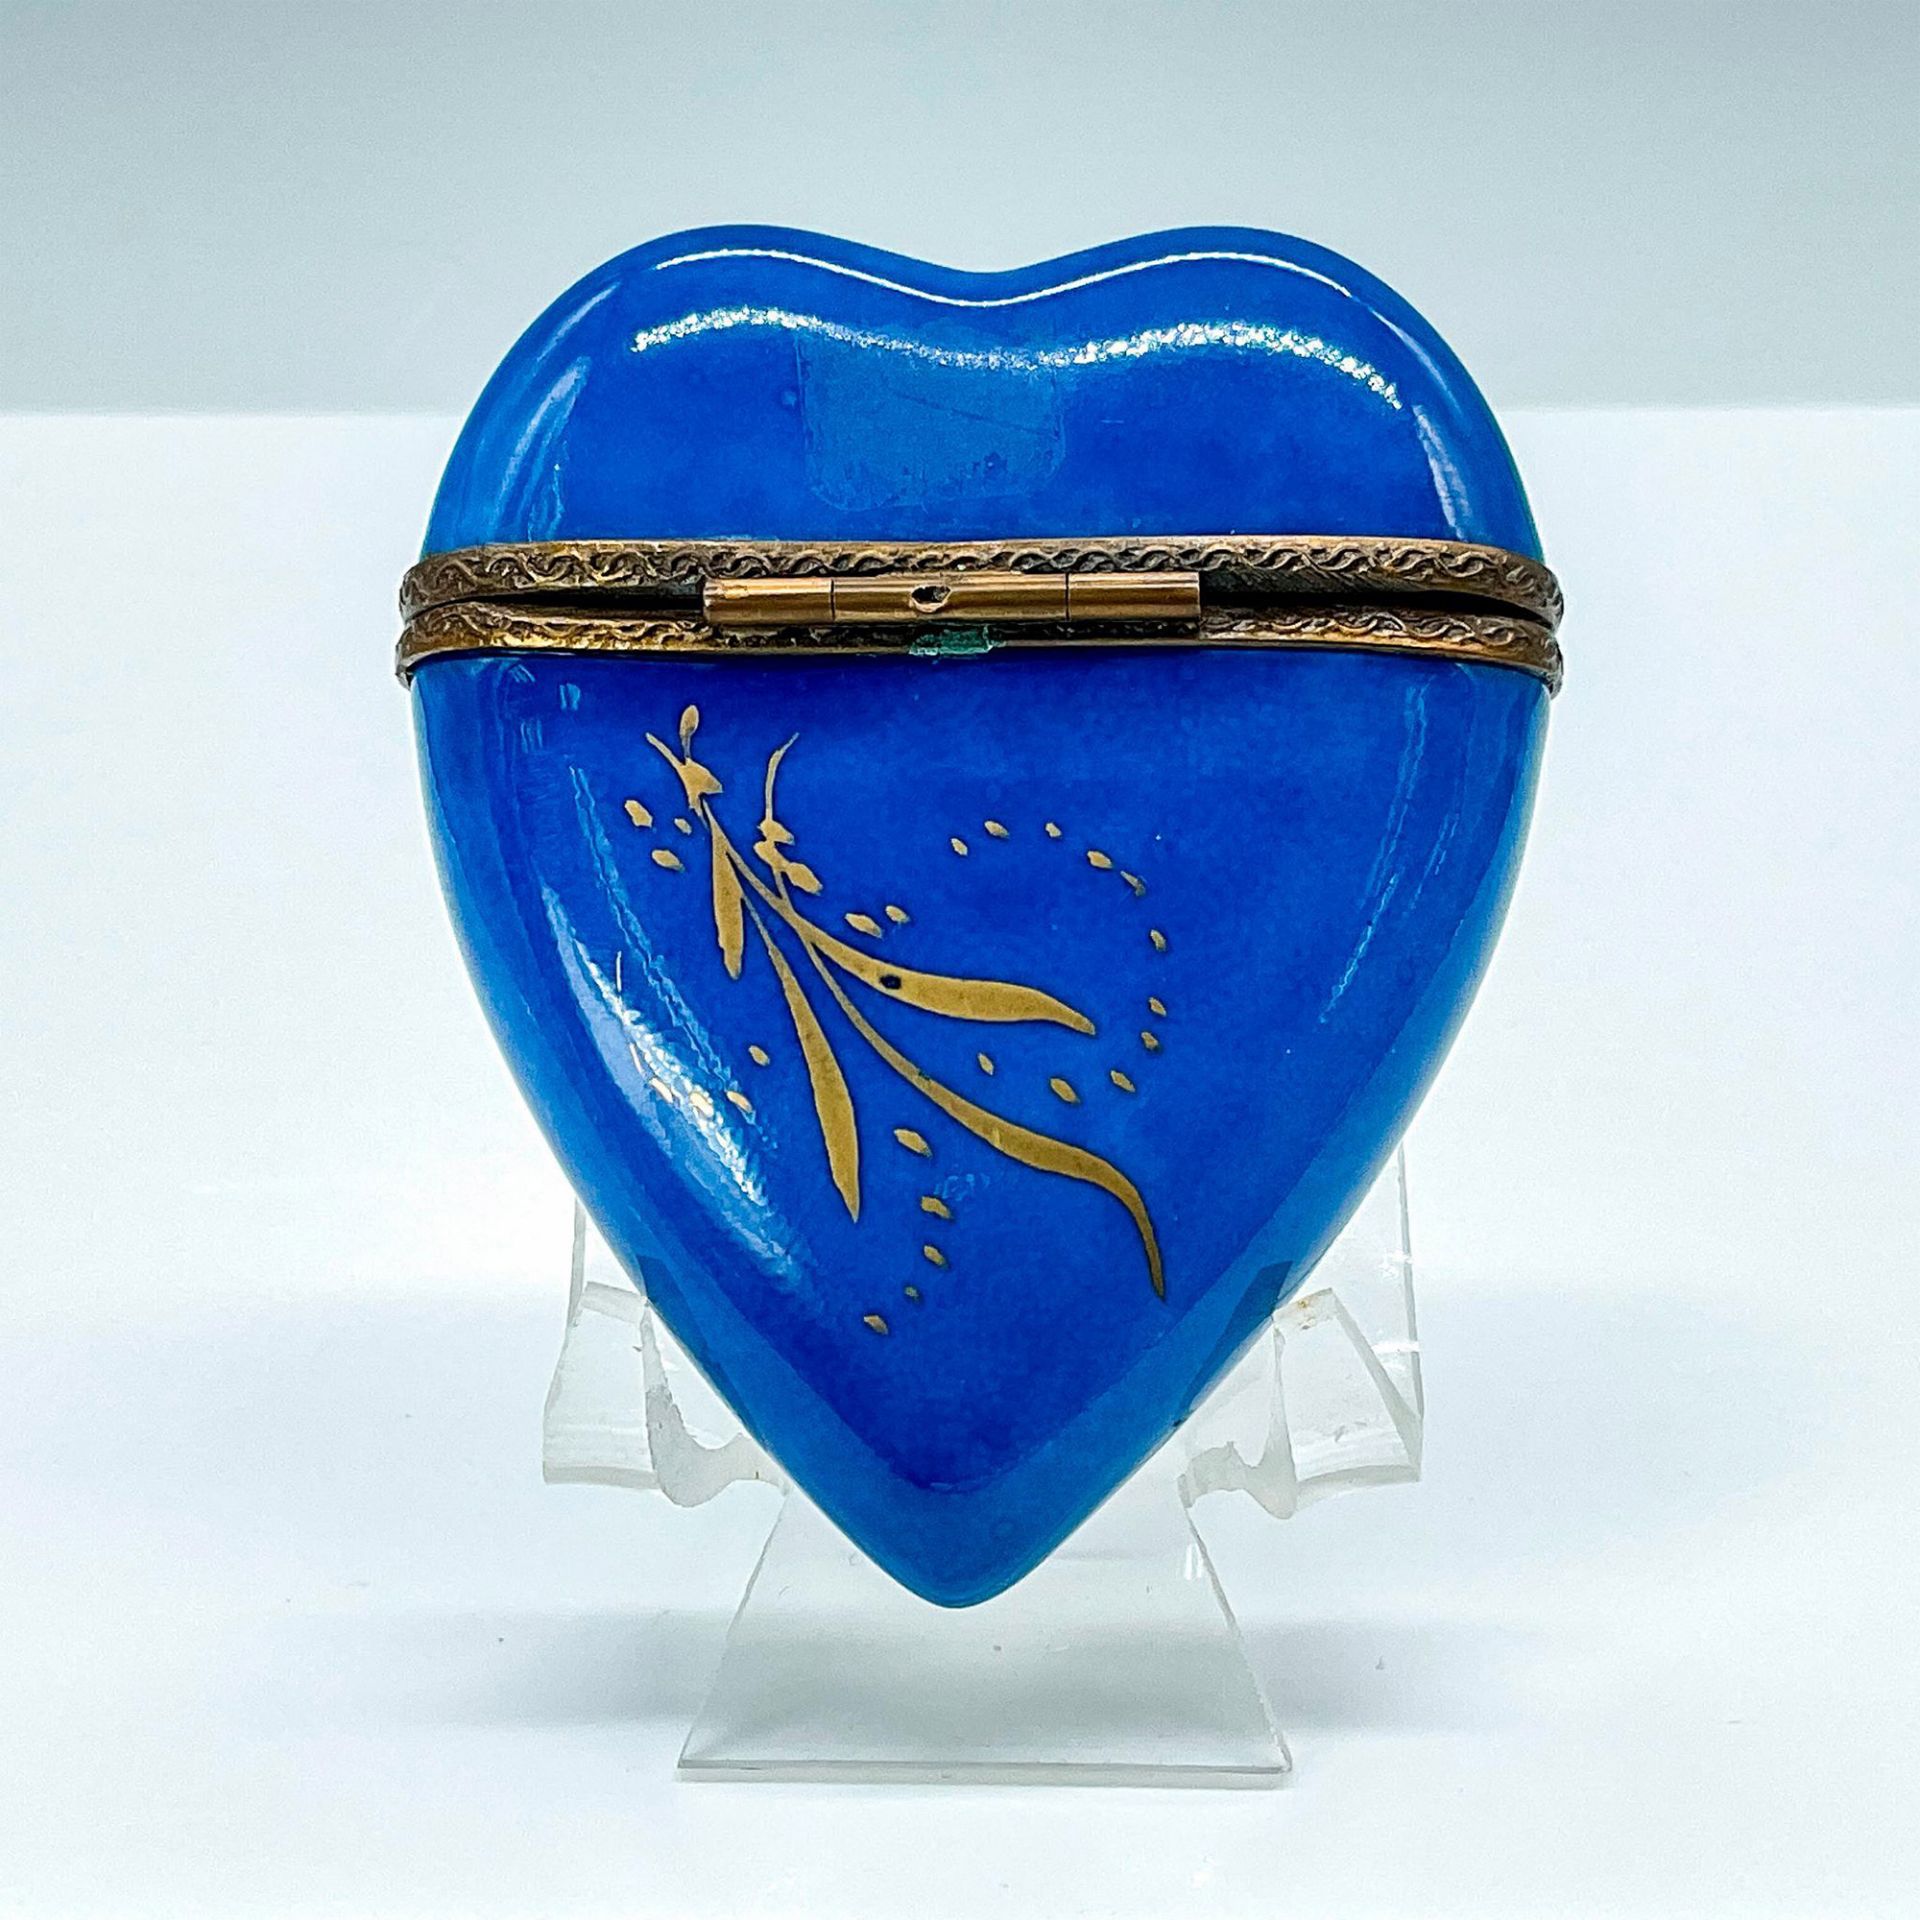 Vintage Limoges Porcelain Hand Painted Heart-Shaped Box - Image 2 of 3